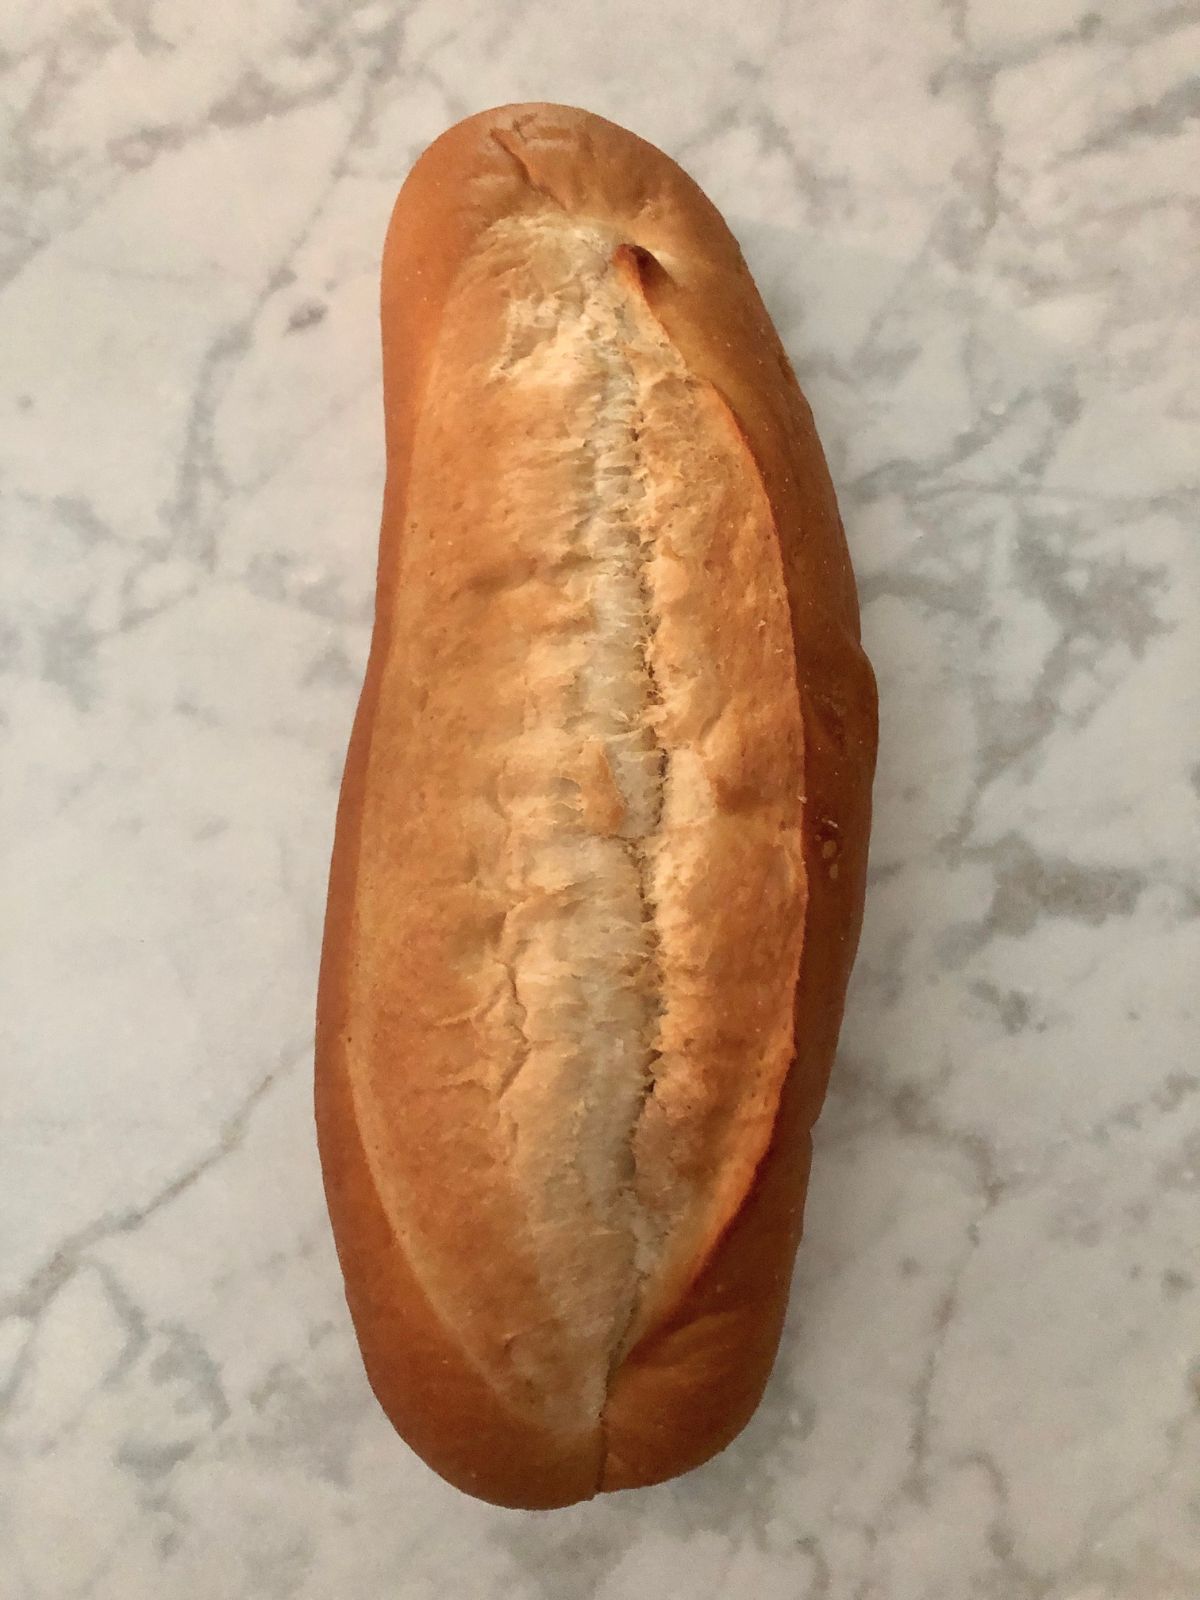 a loaf of Italian bread.